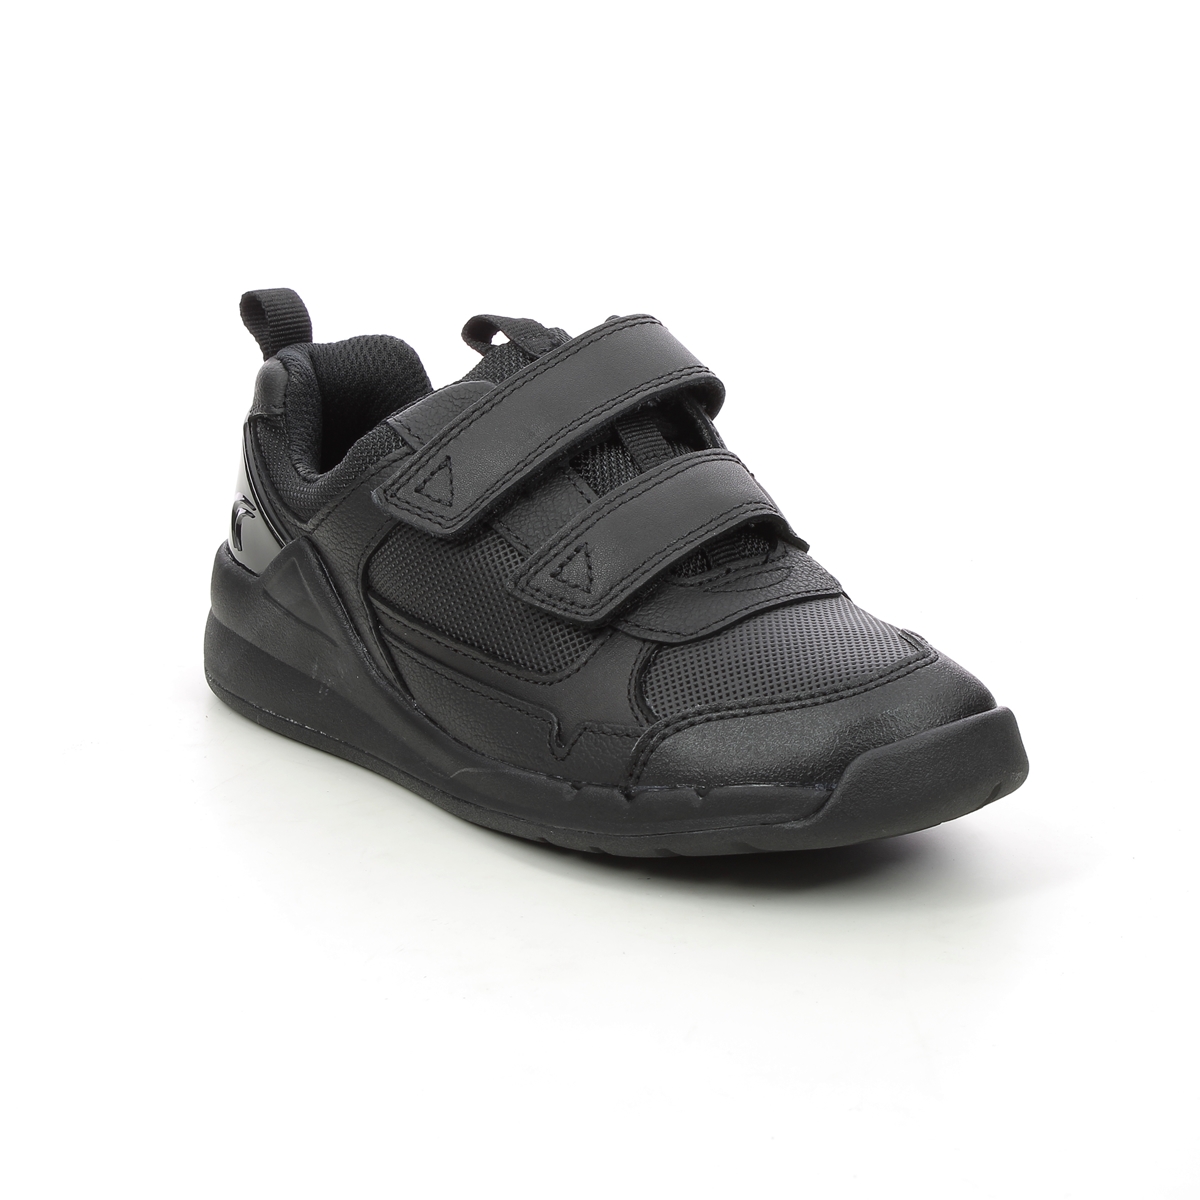 Clarks Orbit Sprint K Black Leather Kids Boys Shoes 534786F In Size 2.5 In Plain Black Leather F Width Fitting Regular Fit For kids